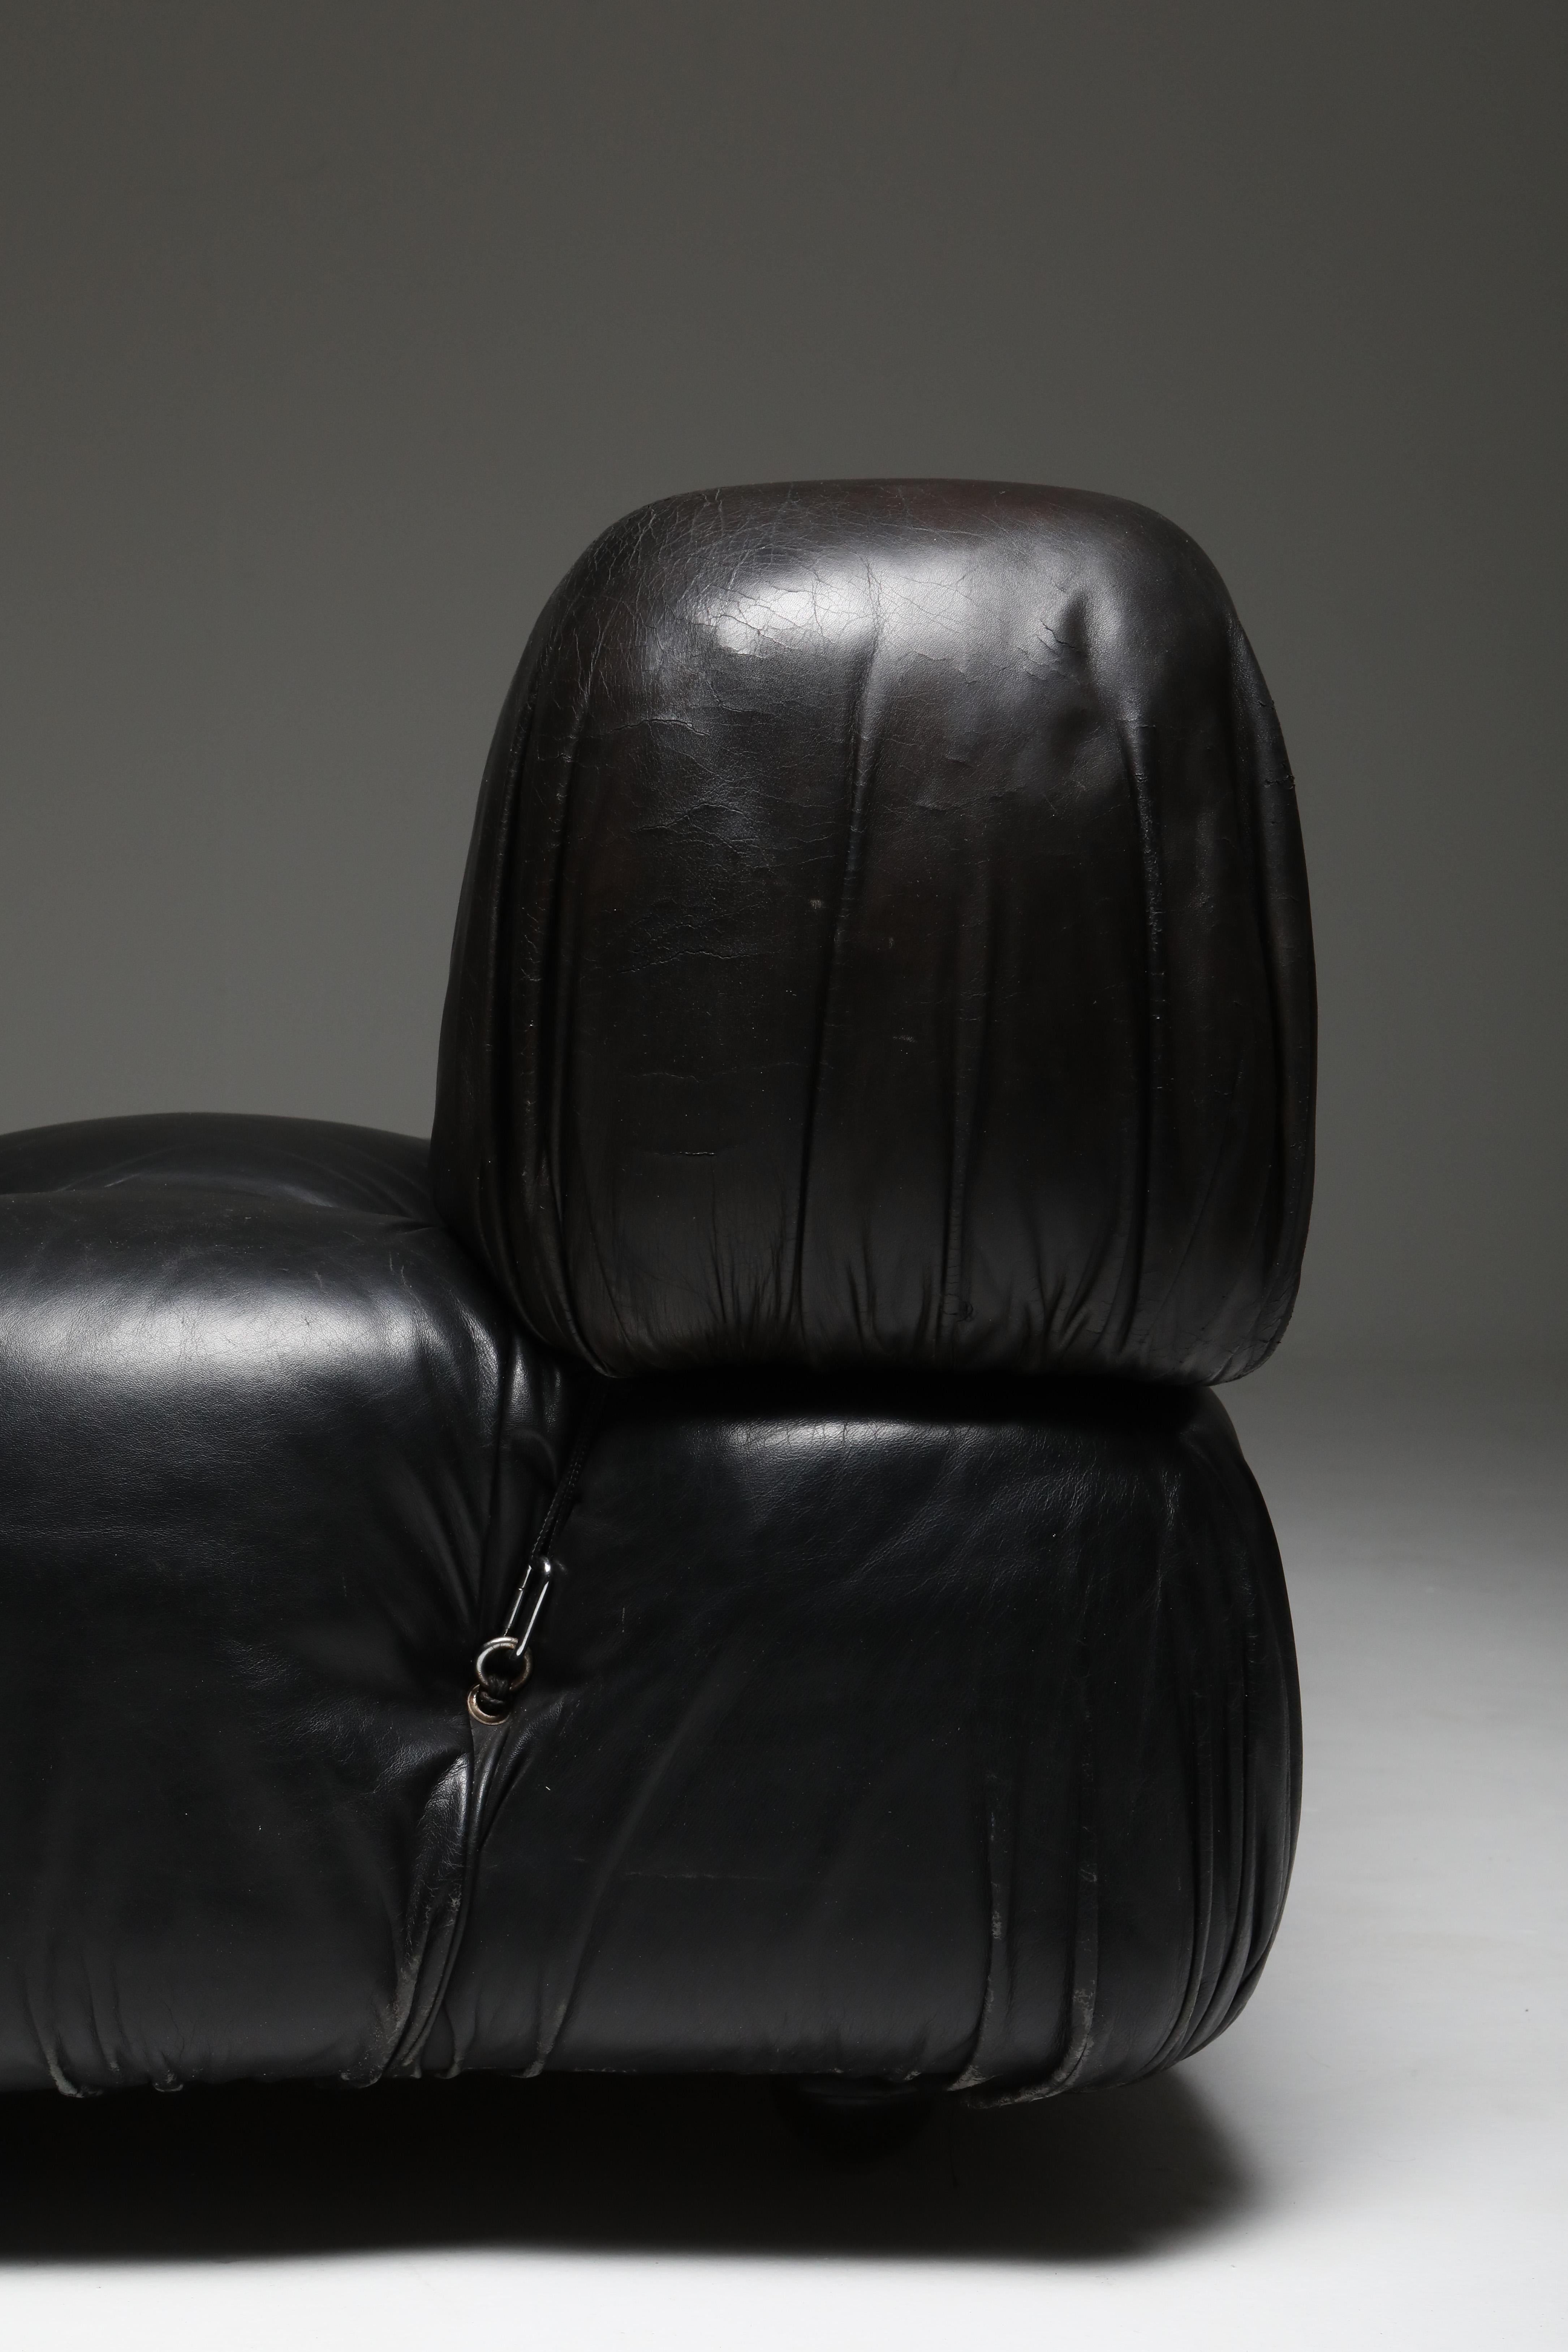 Camaleonda Black Leather Lounge chair 10